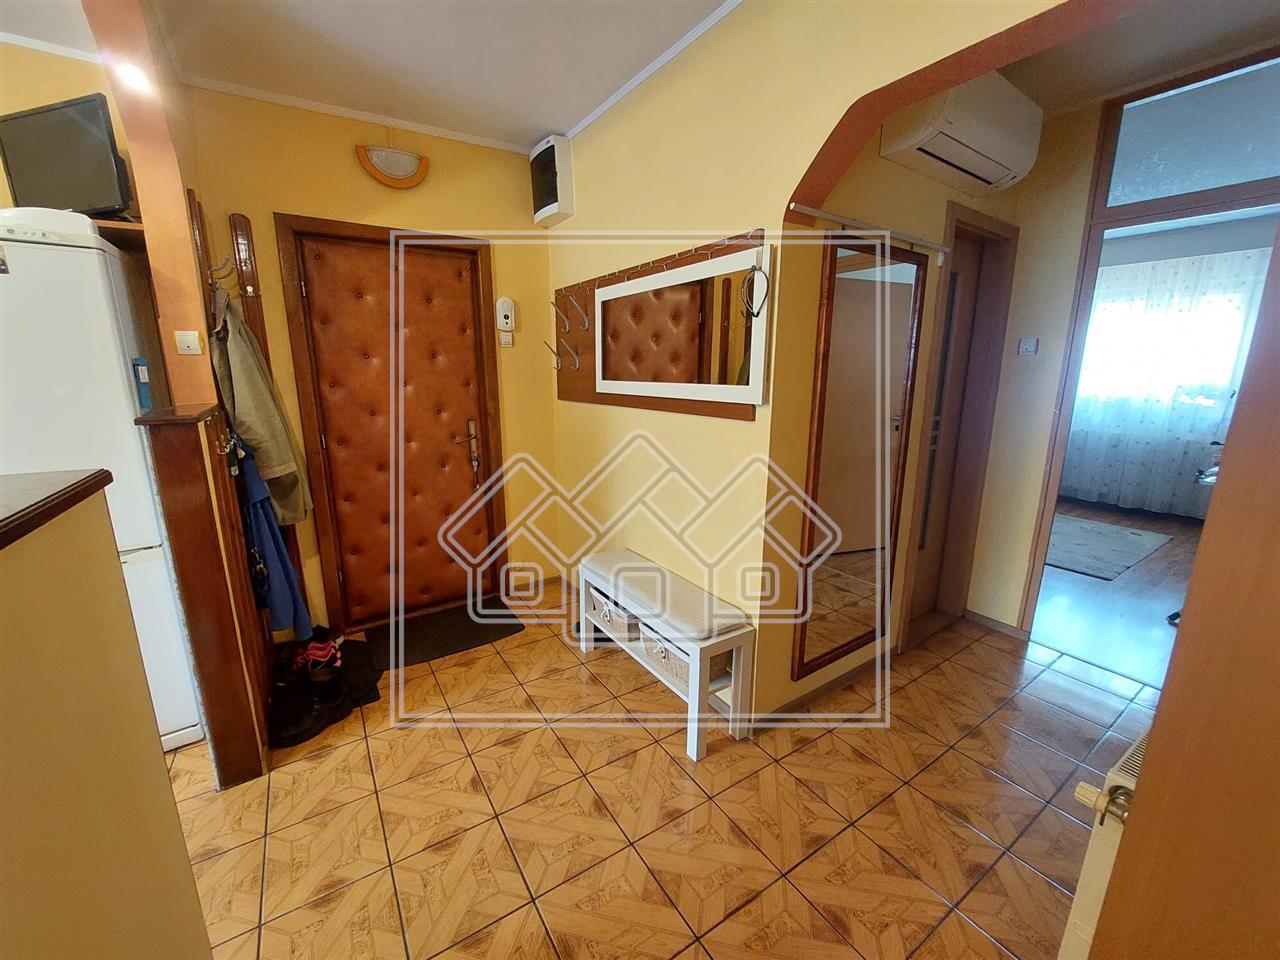 3-room apartment for sale in Sibiu - Detached, 2 balconies, 2 bathroom